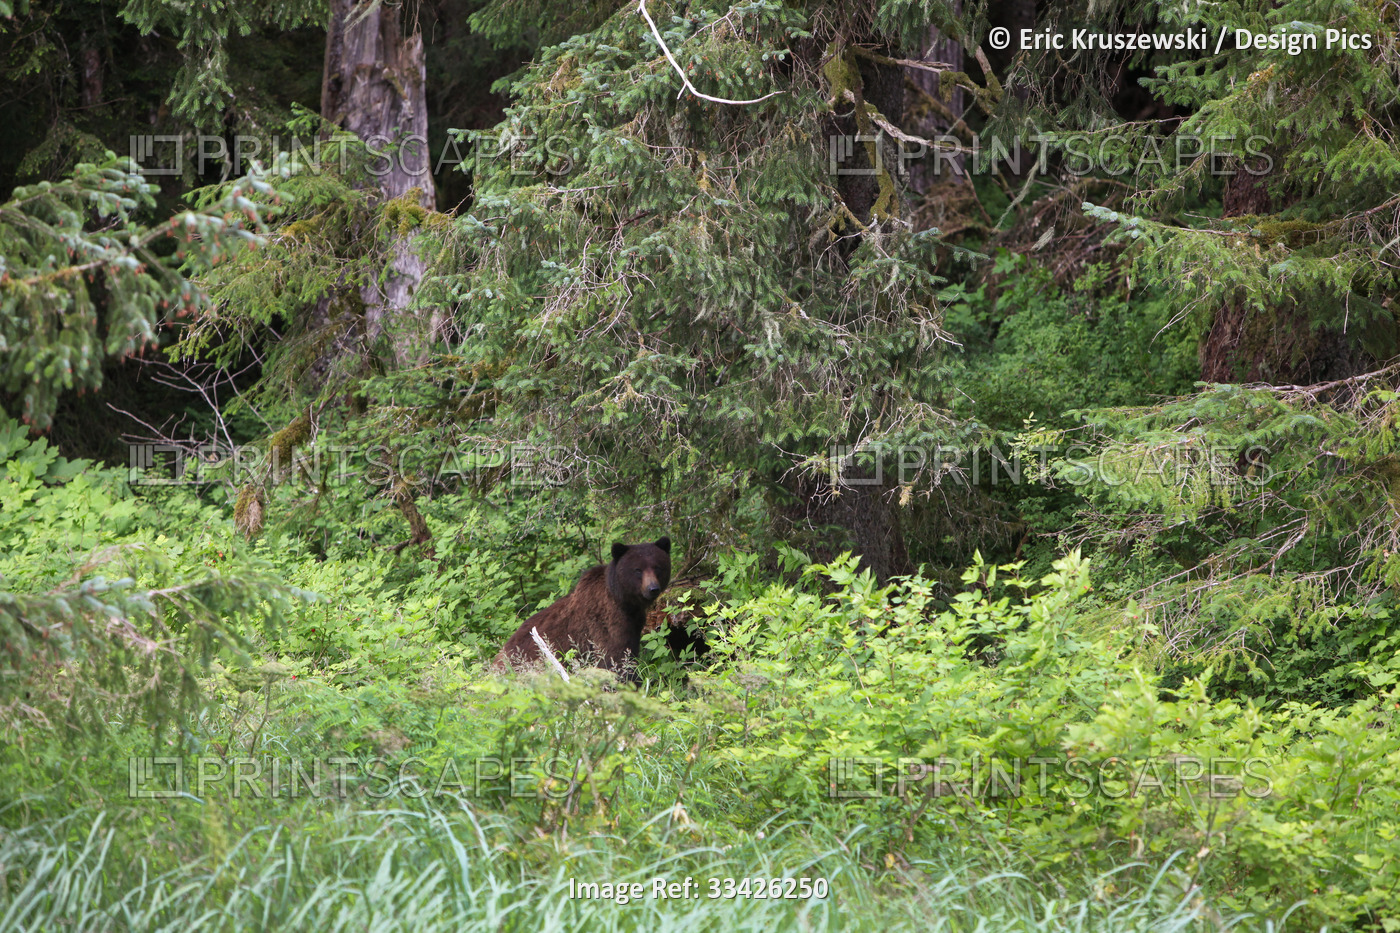 An Alaskan brown bear, Ursus arctos, stands amongst lush green trees and ...